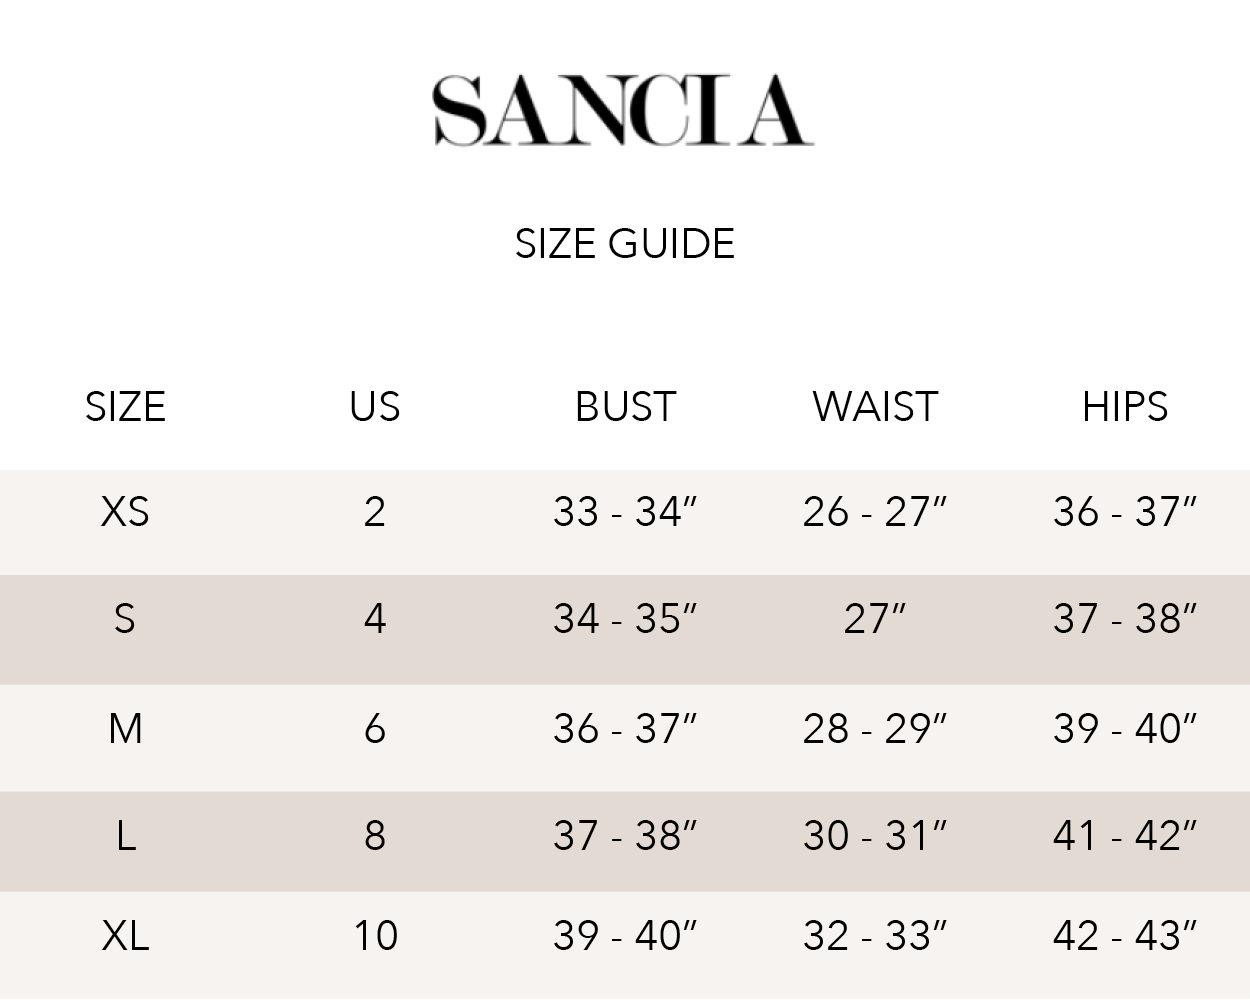 Sancia Size Guide